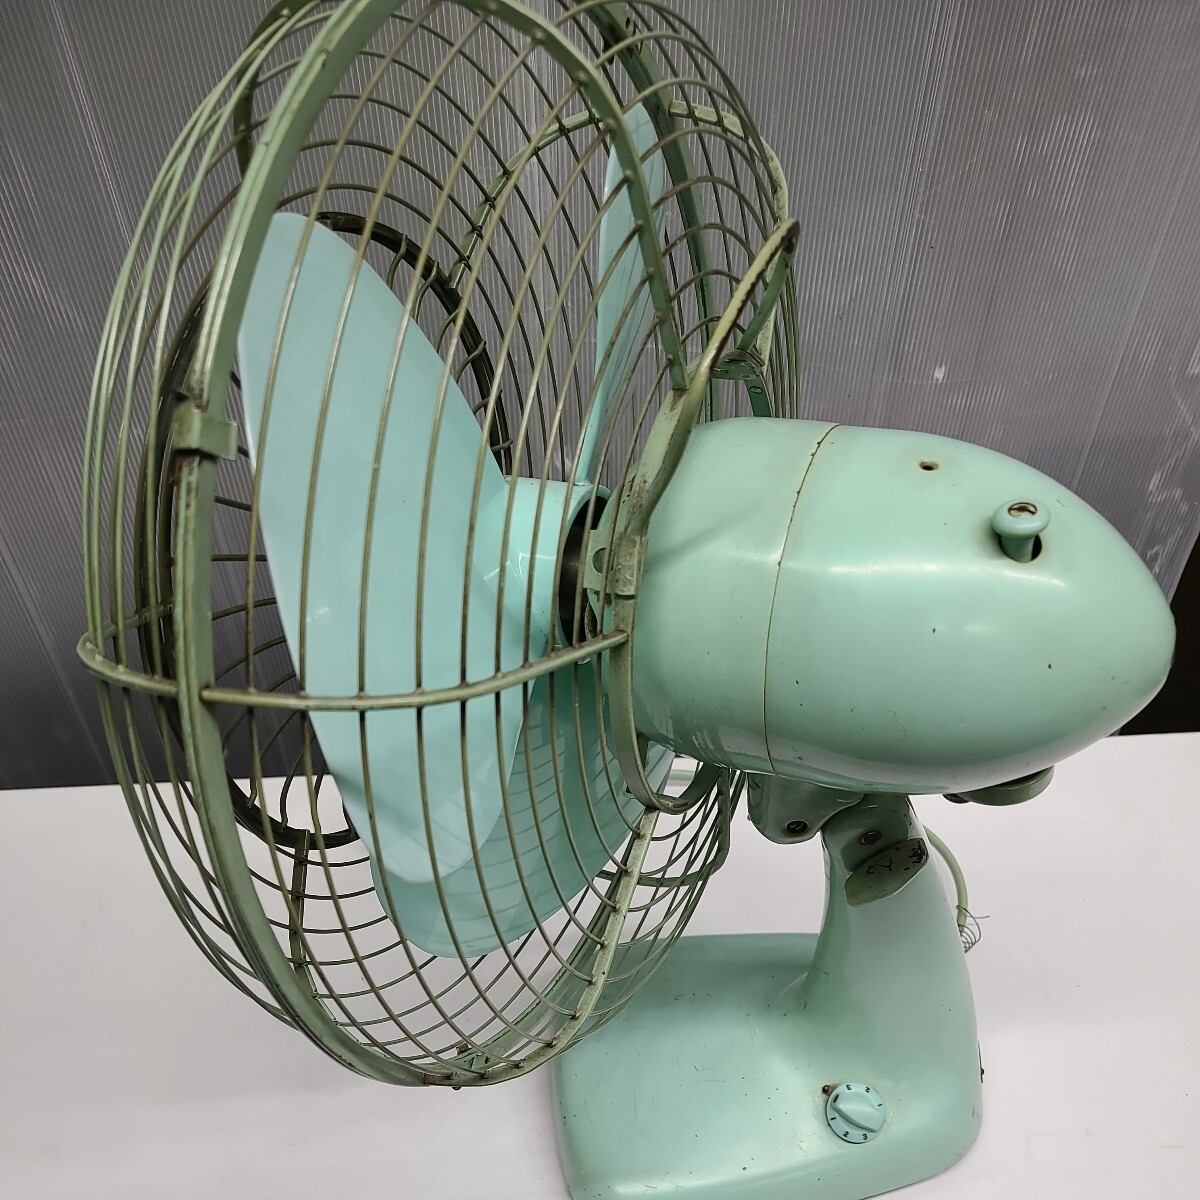  Showa Retro античный вентилятор Mitsubishi подлинная вещь 